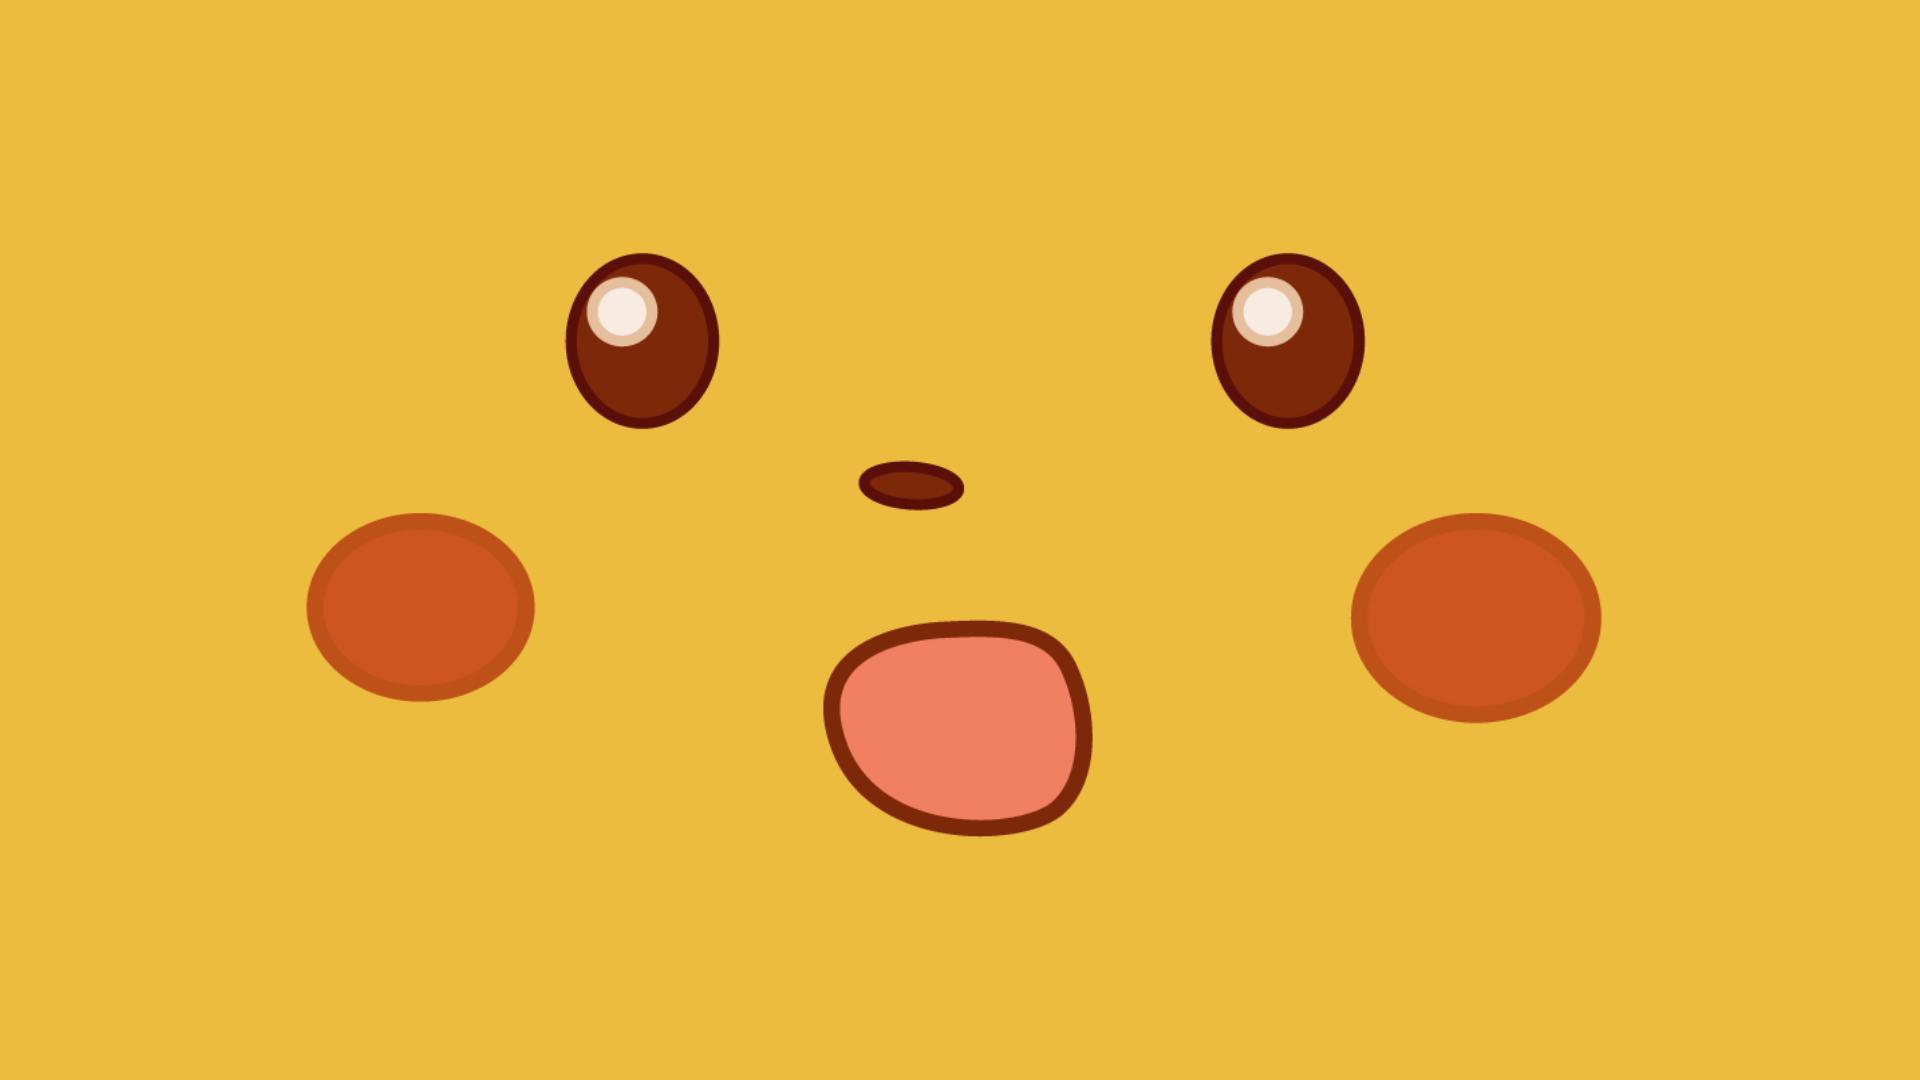 Pikachu Memes Wallpapers - Wallpaper Cave.